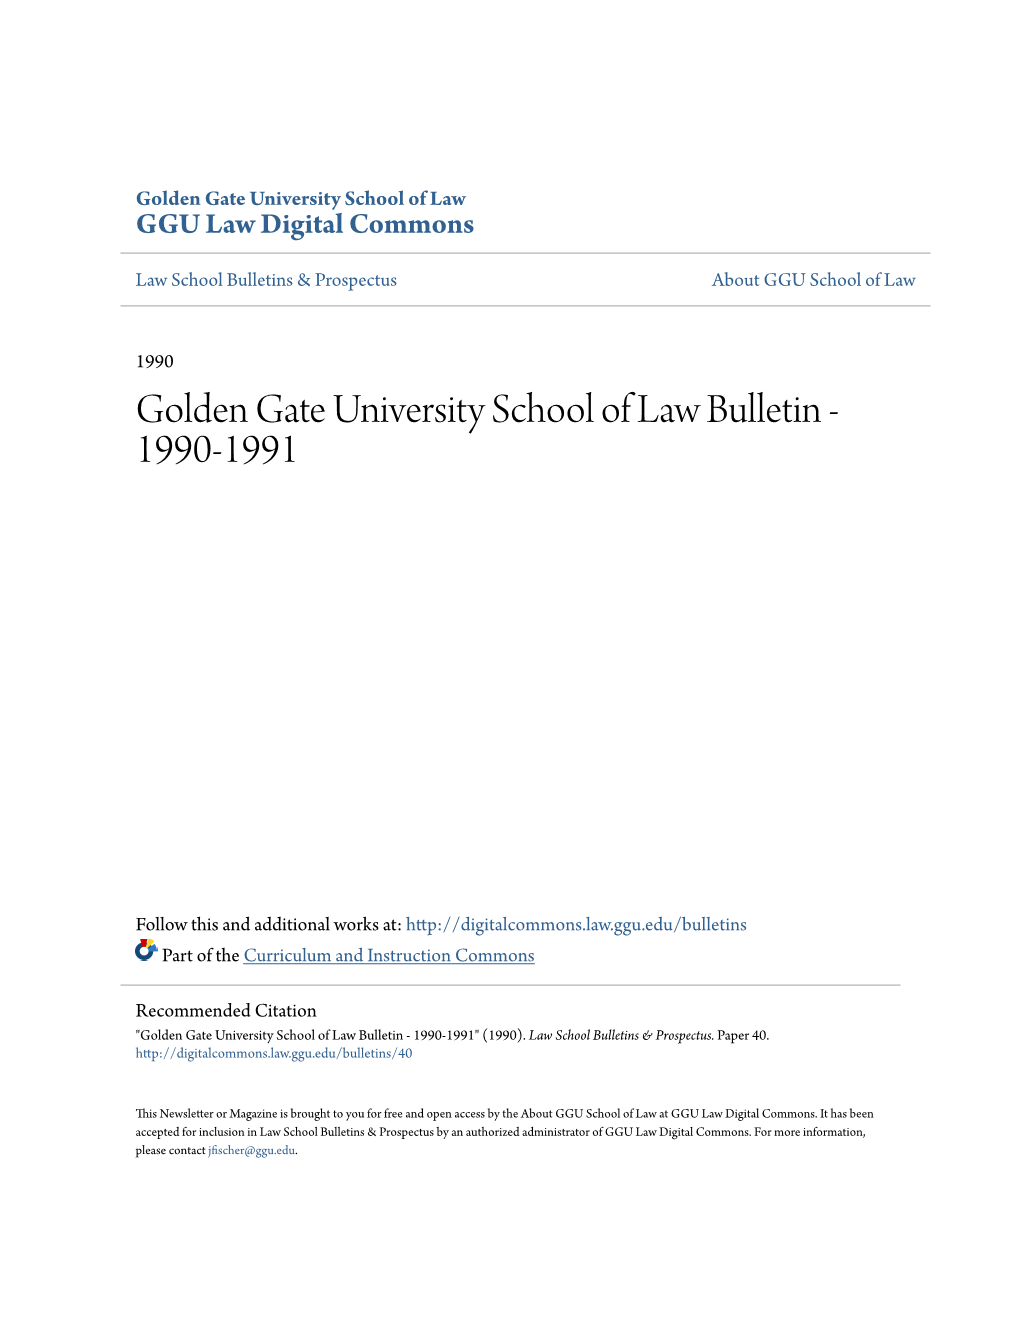 Golden Gate University School of Law Bulletin - 1990-1991